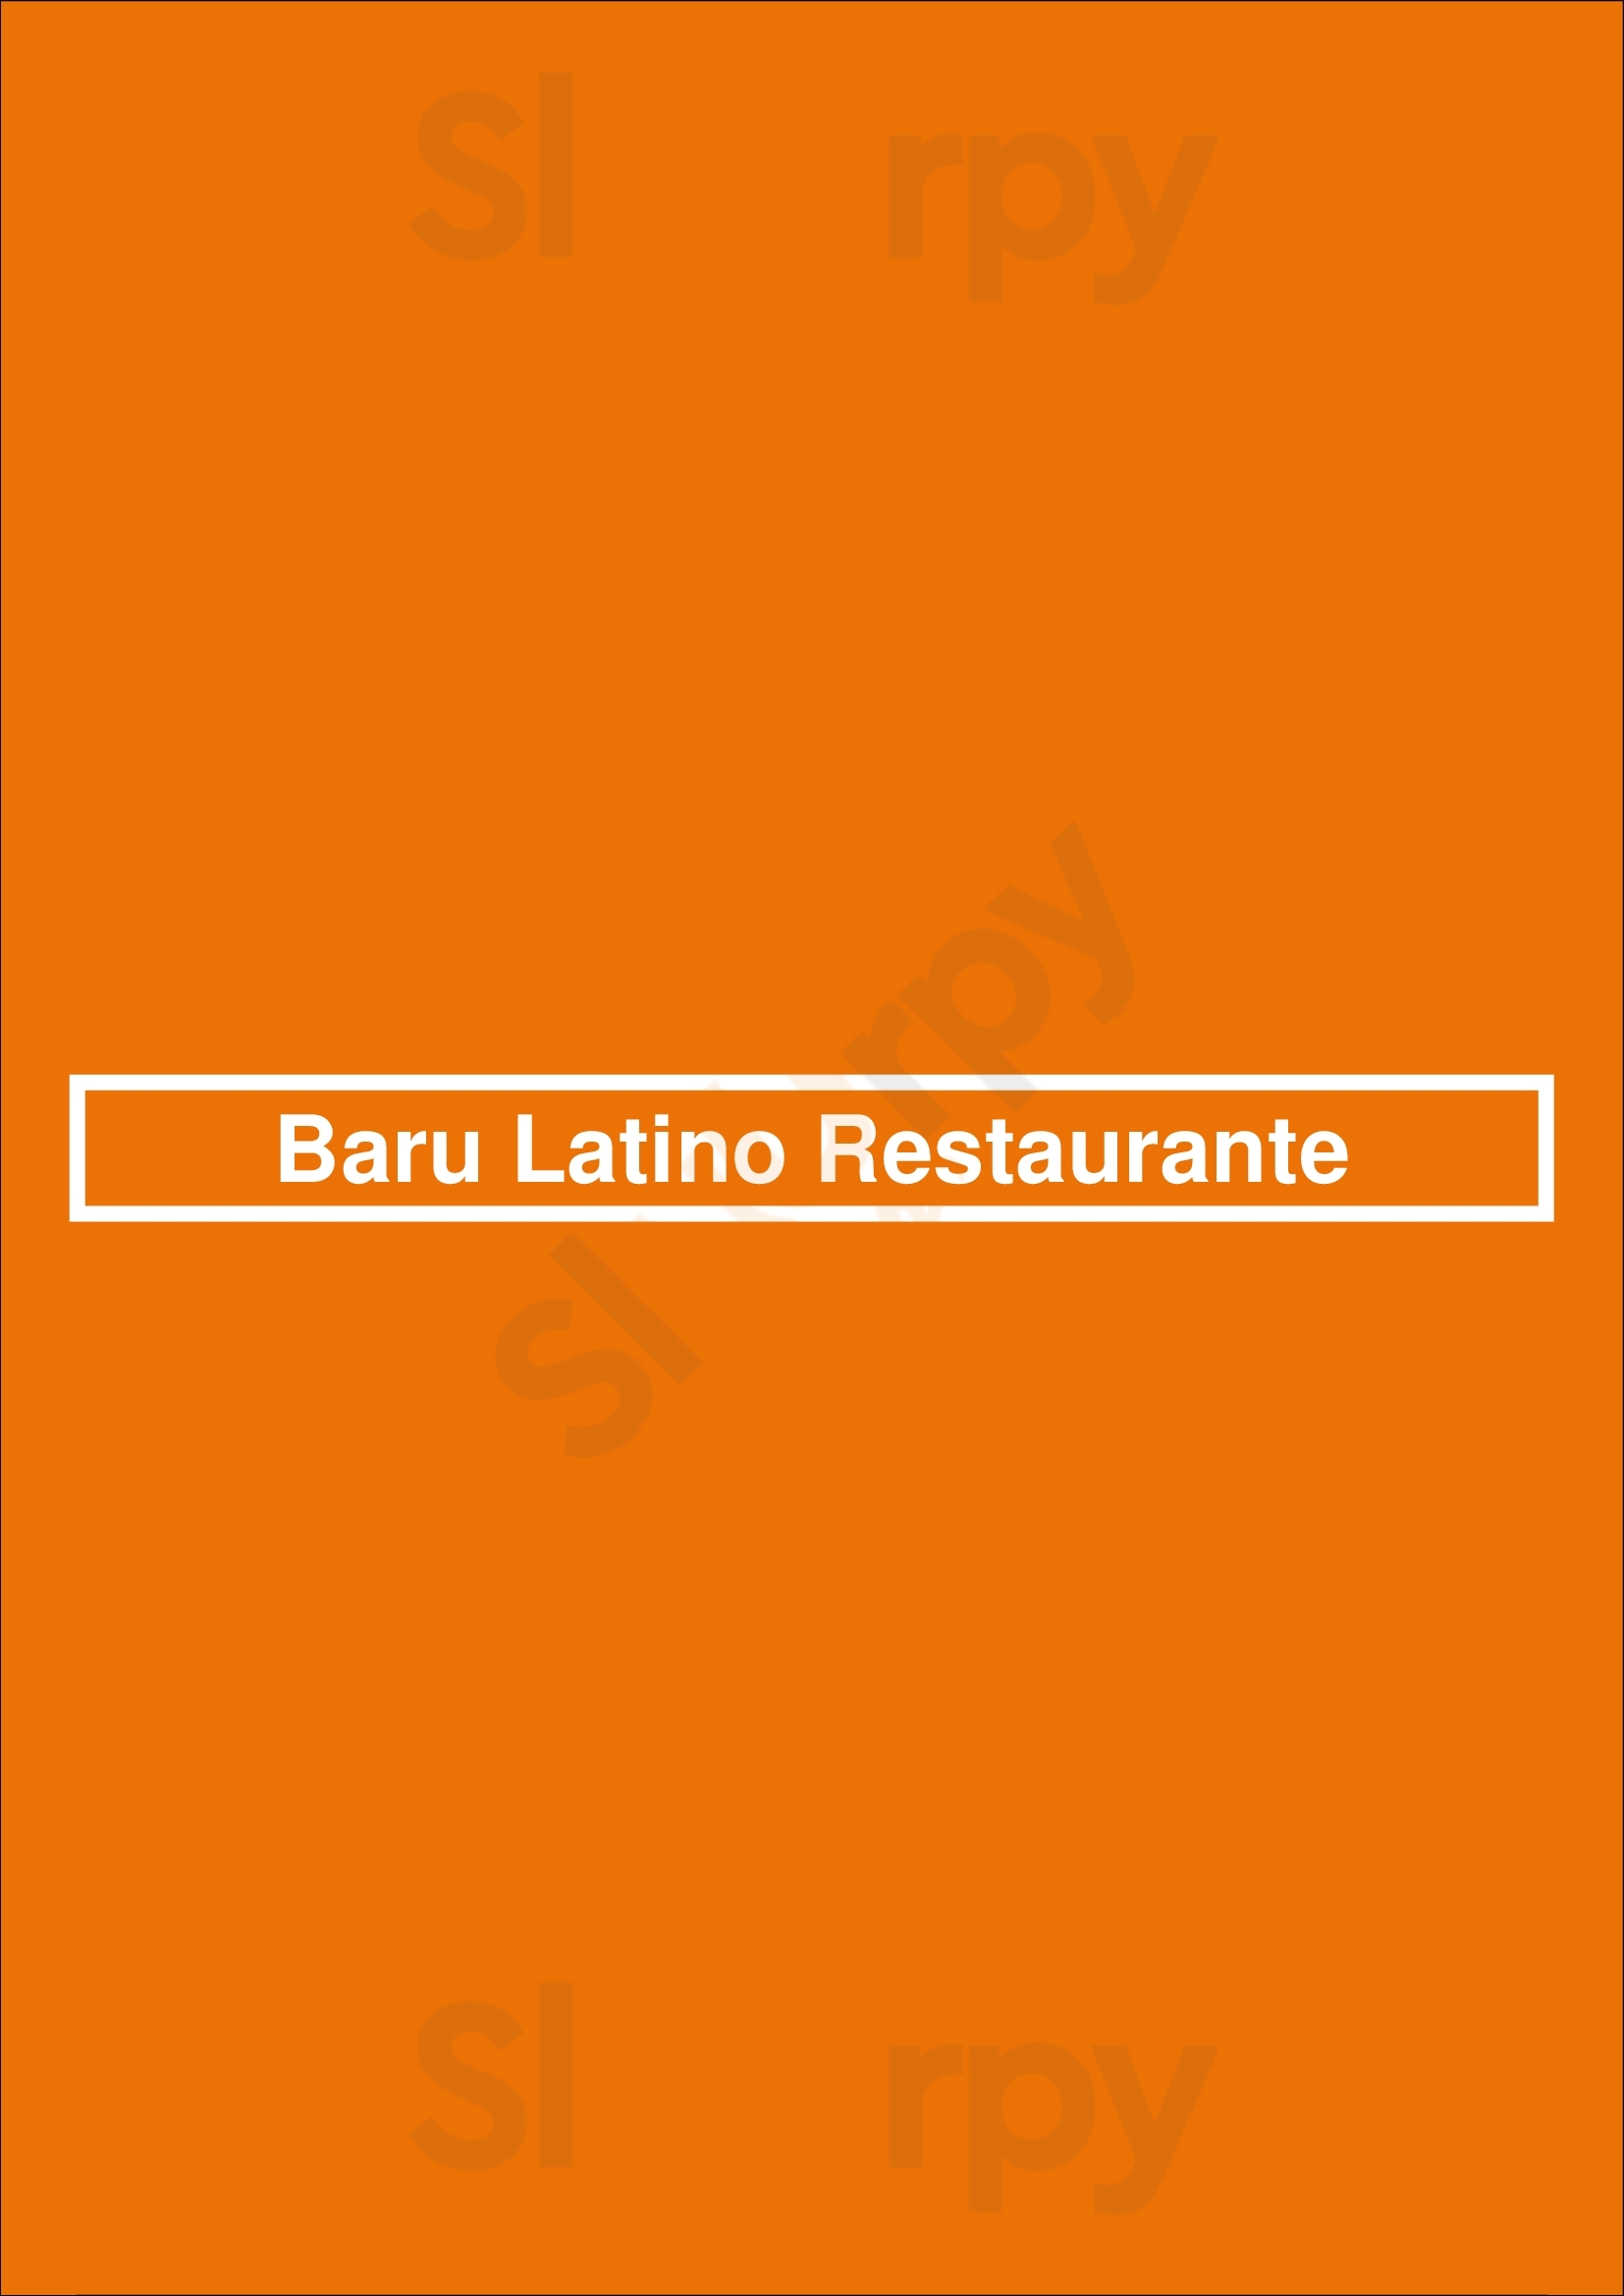 Baru Latino Restaurante Vancouver Menu - 1